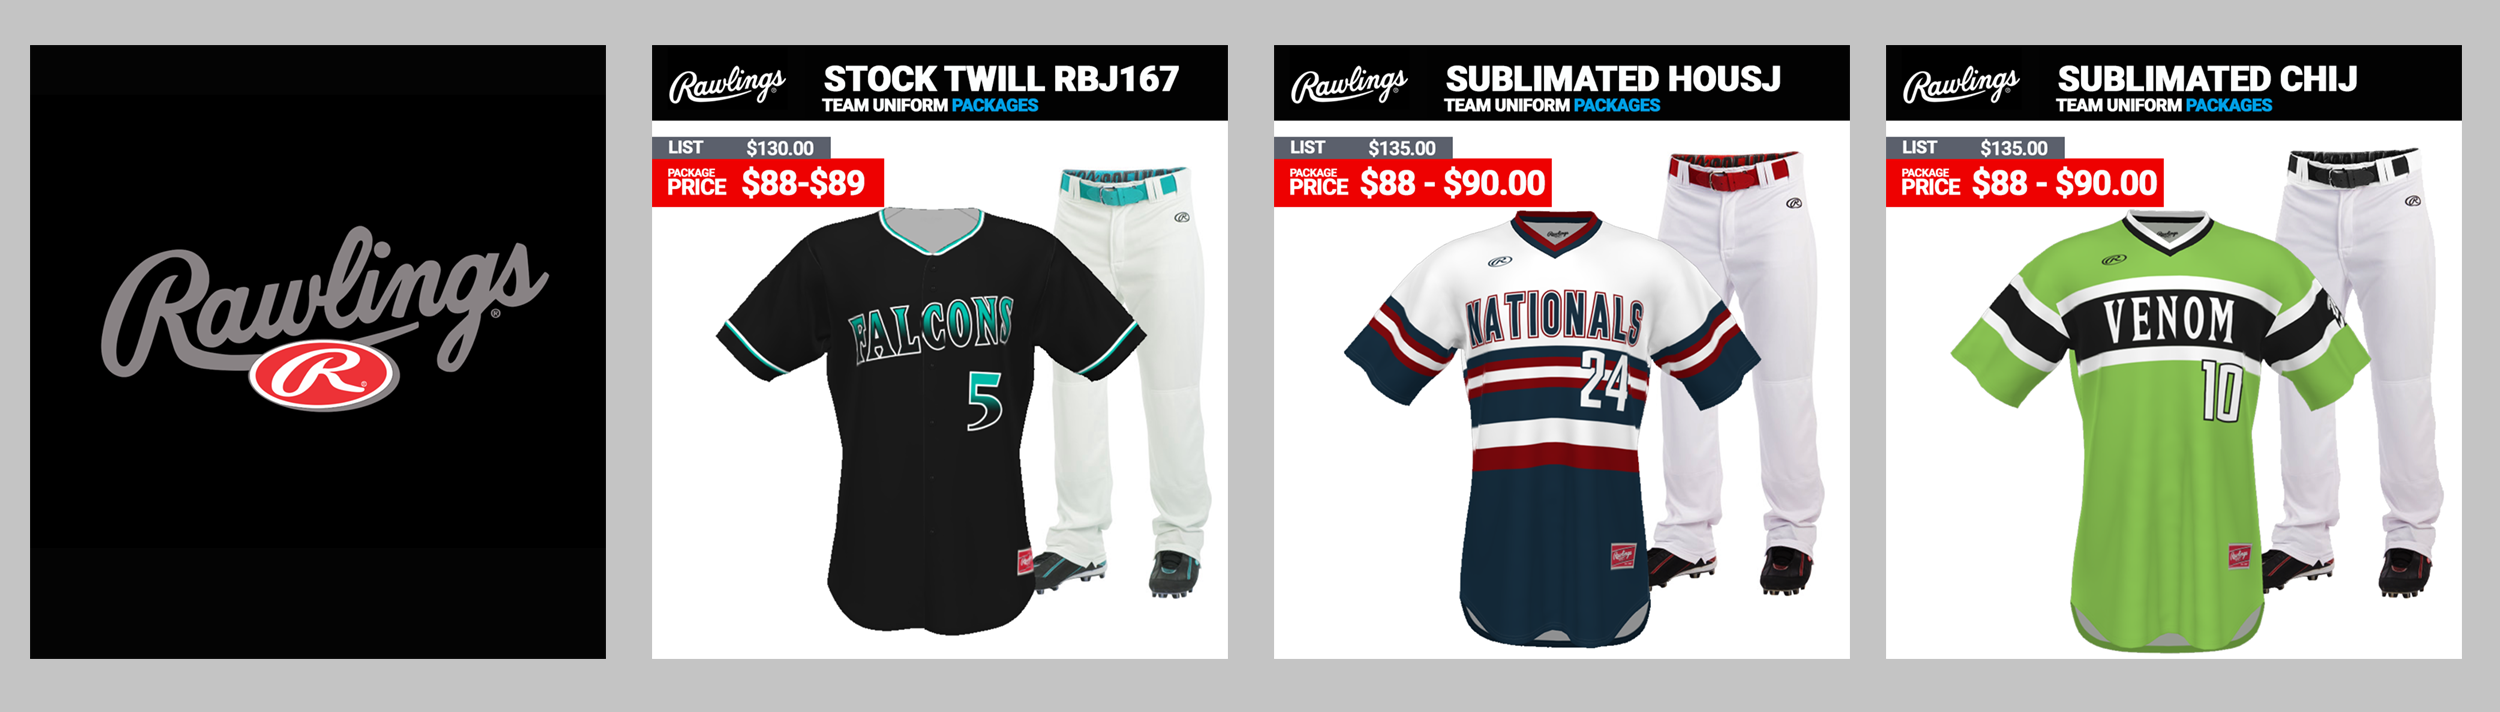 Rawlings Baseball Uniform Packages